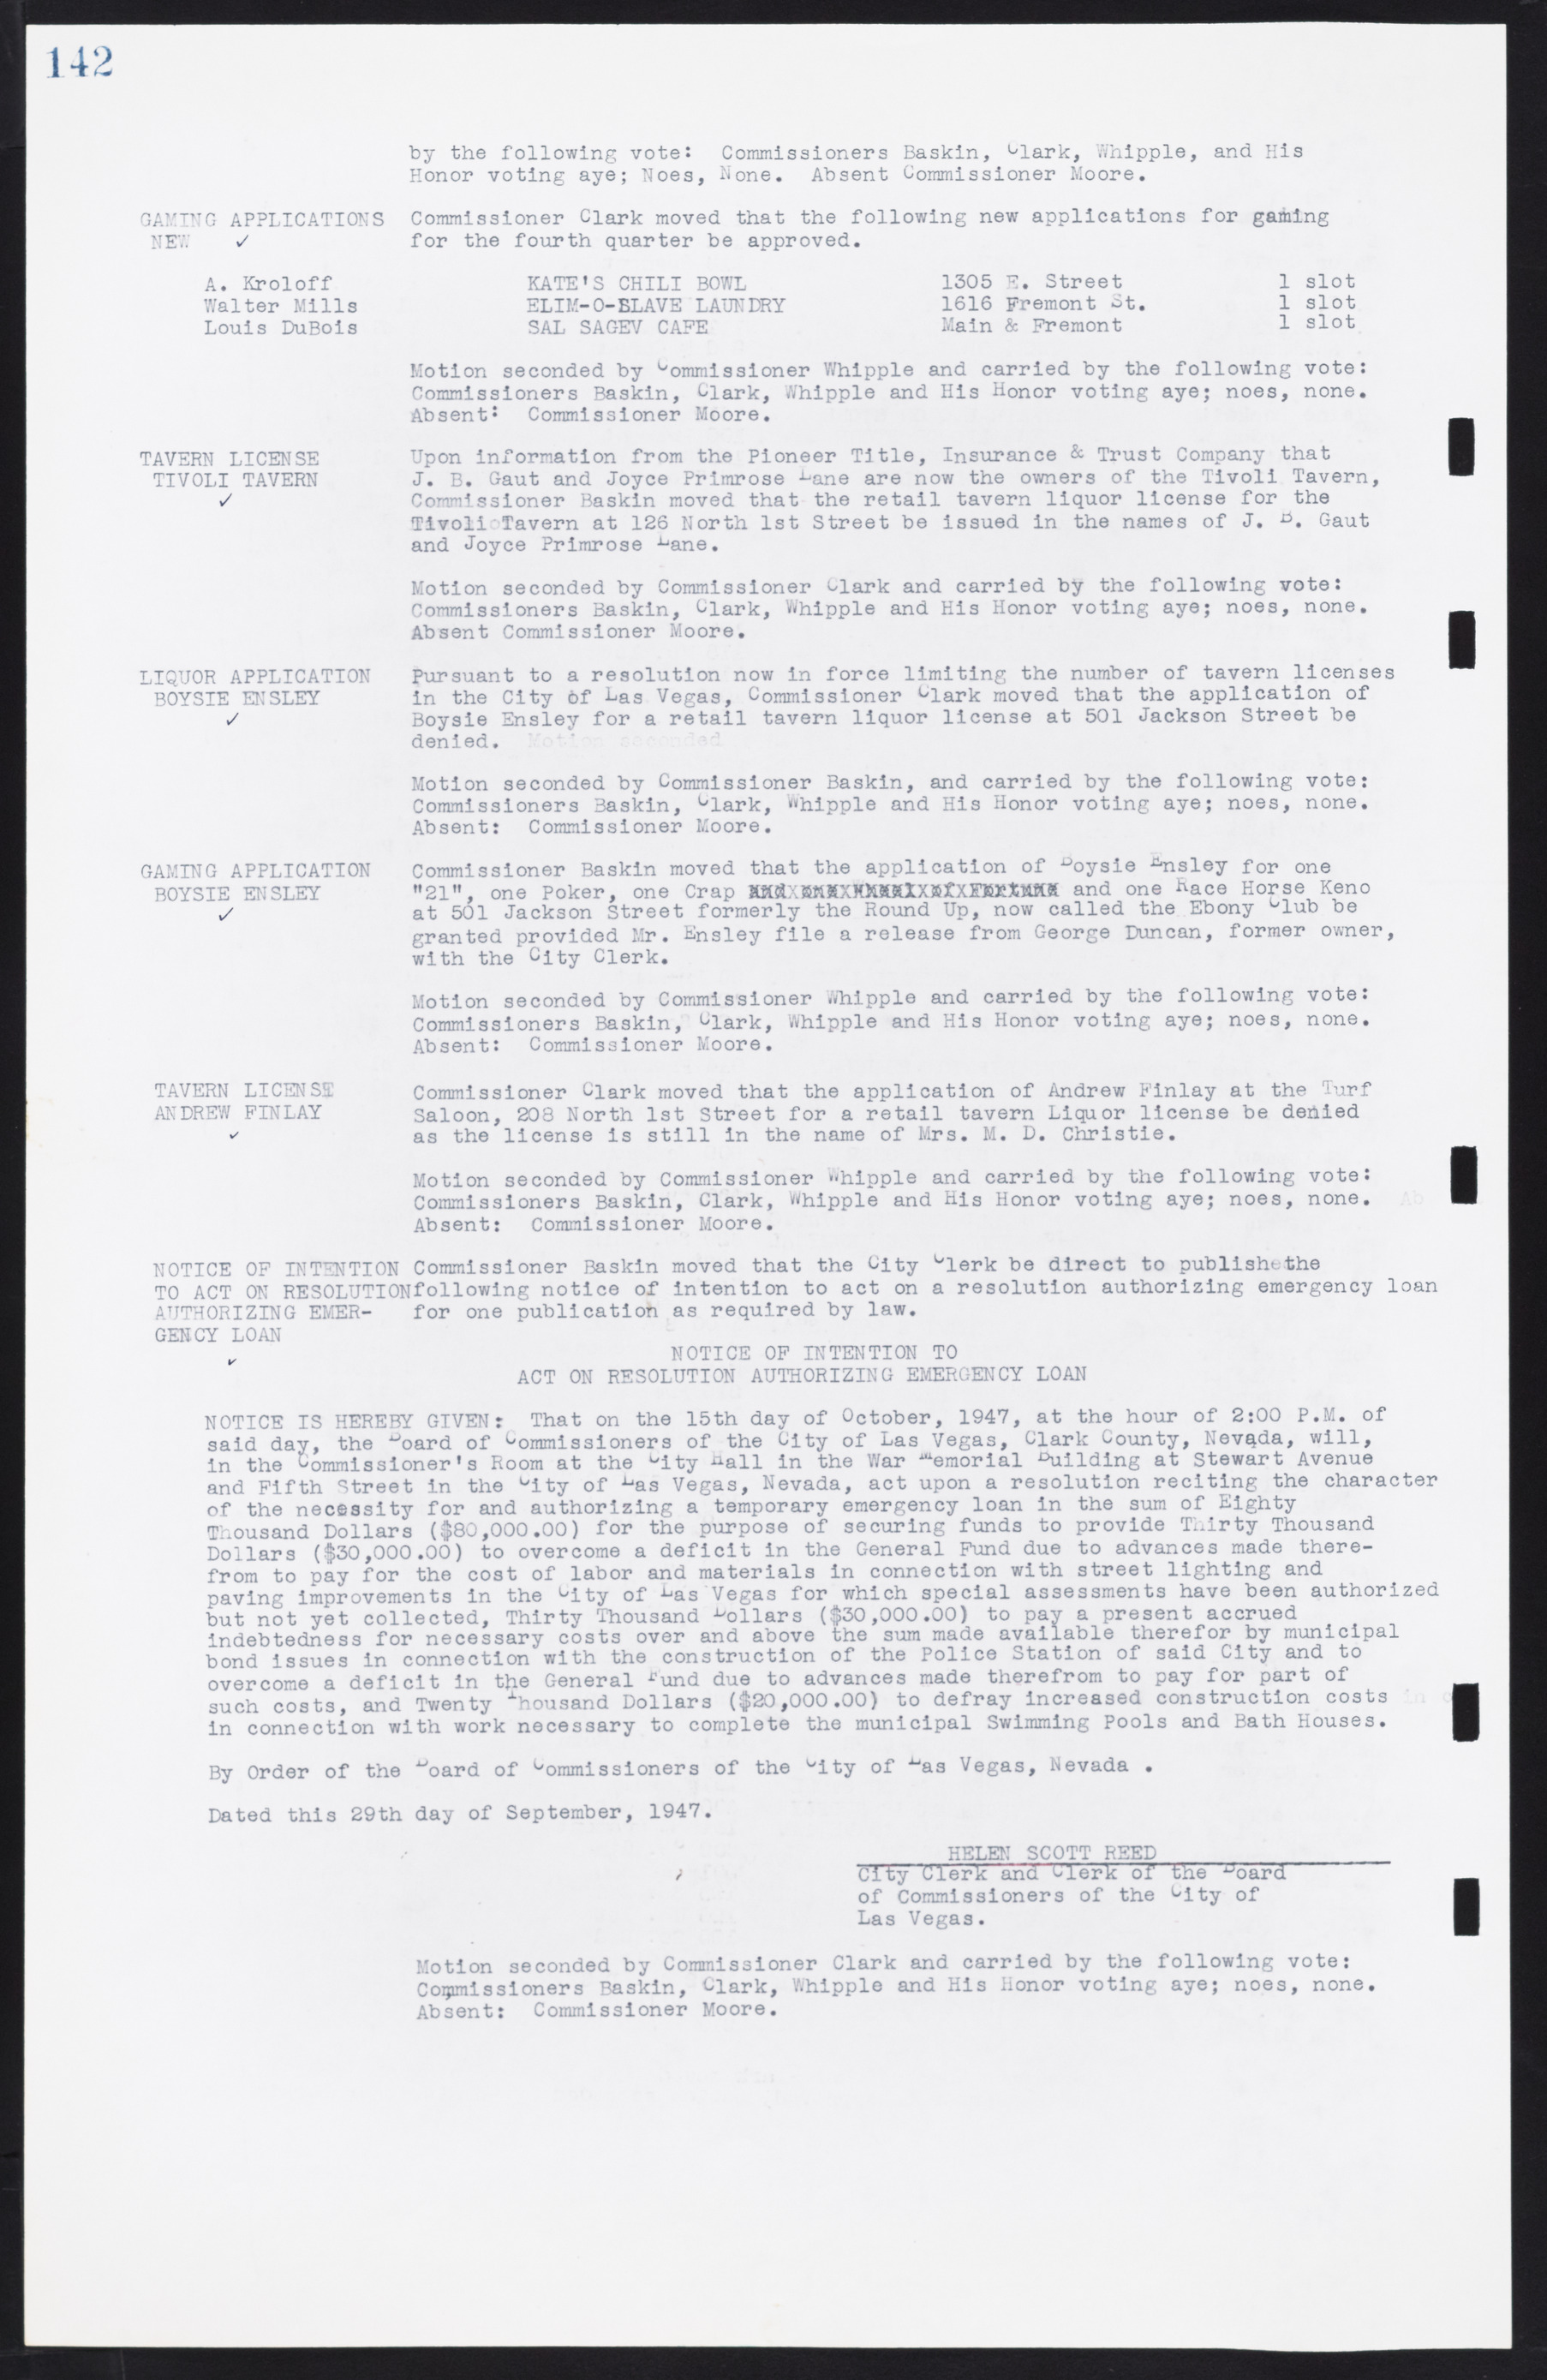 Las Vegas City Commission Minutes, January 7, 1947 to October 26, 1949, lvc000006-160